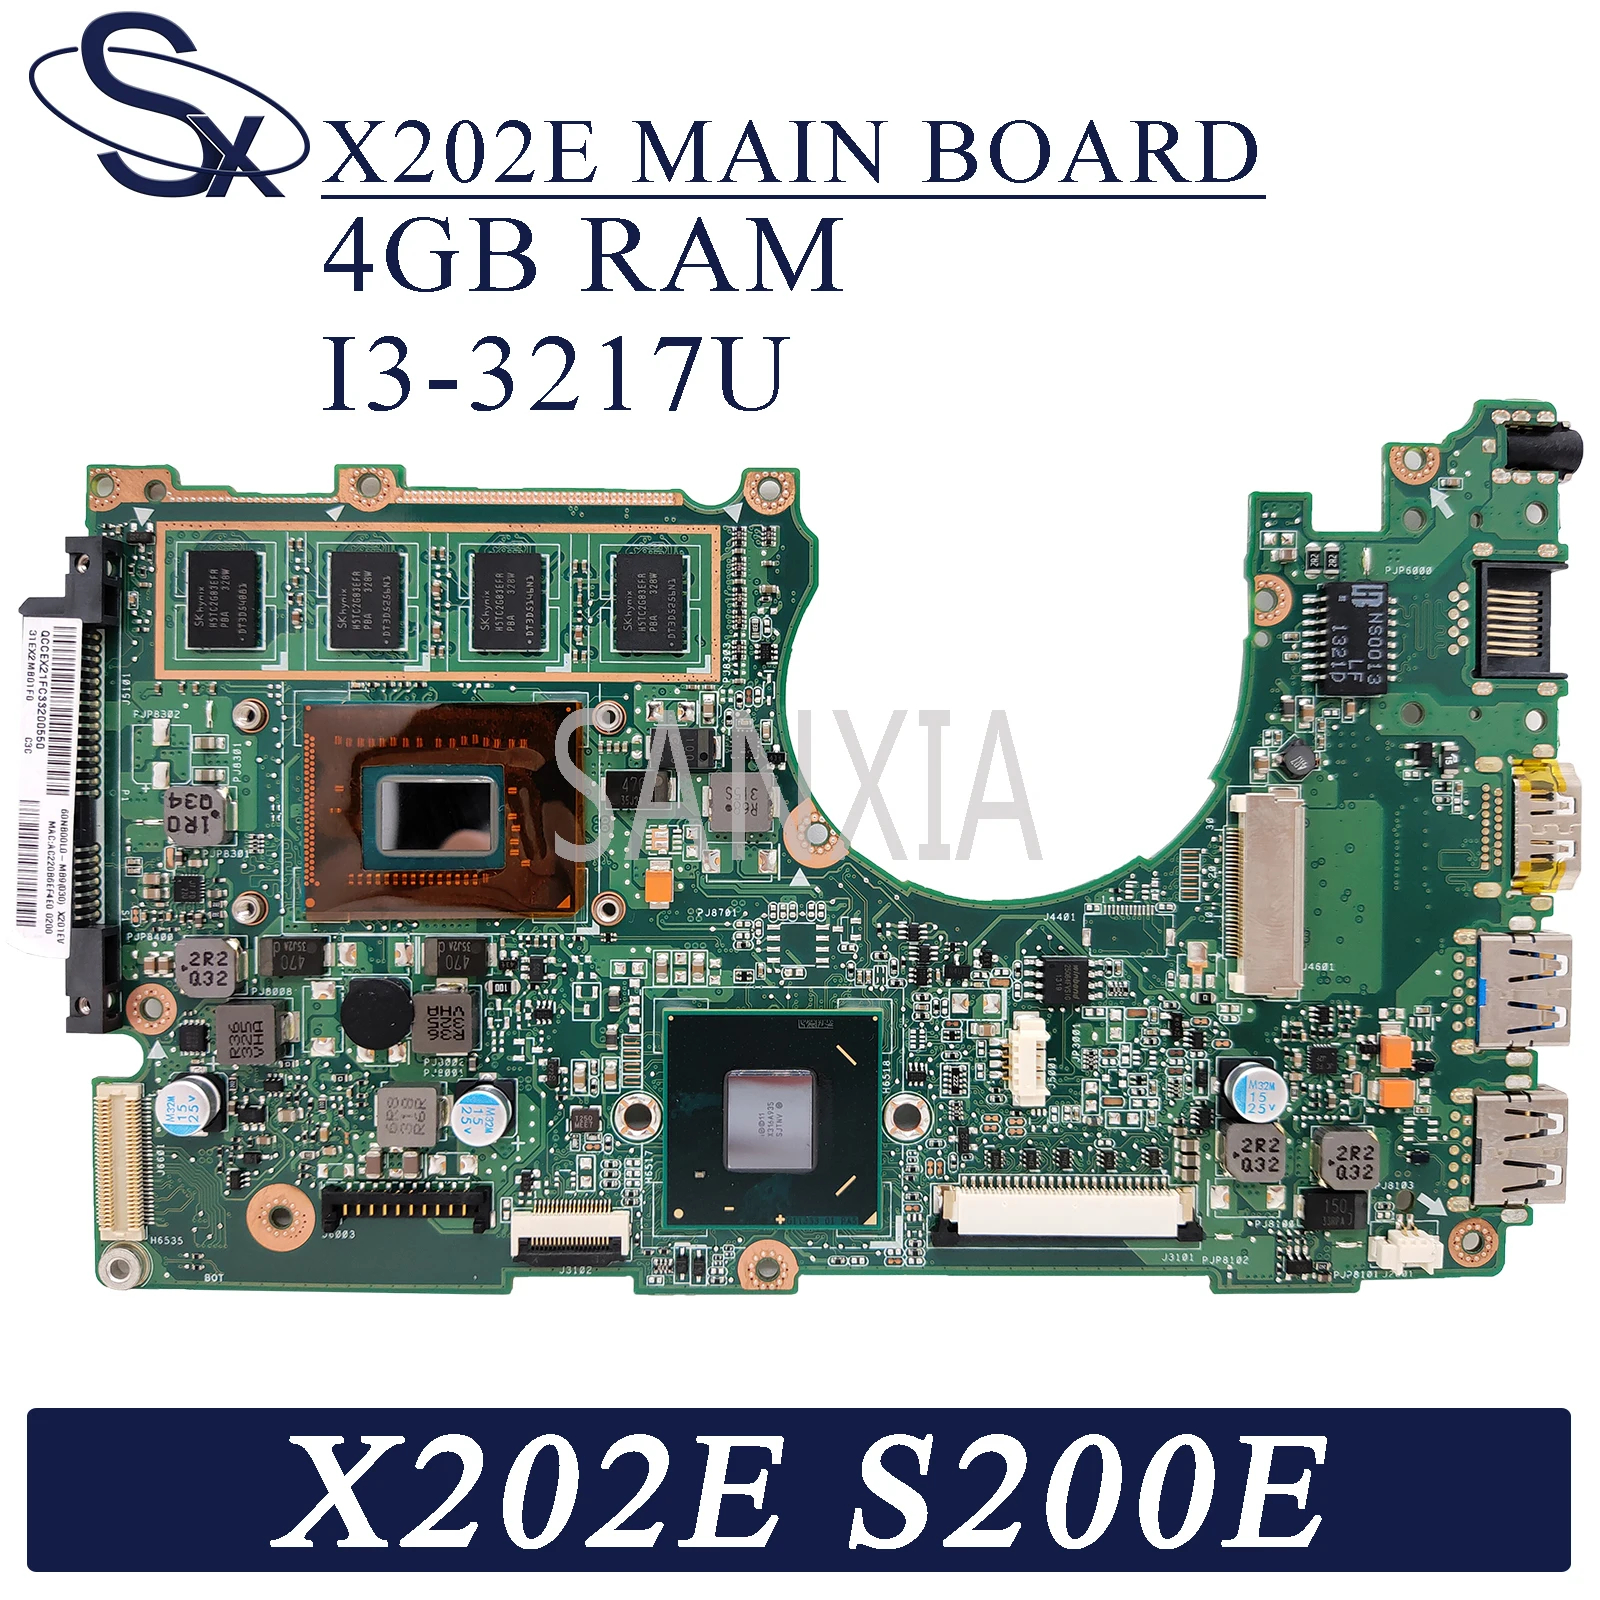 

KEFU X202E Laptop motherboard for ASUS VivoBook S200E X201E X201EP X201EV original mainboard 4GB-RAM I3-3217U